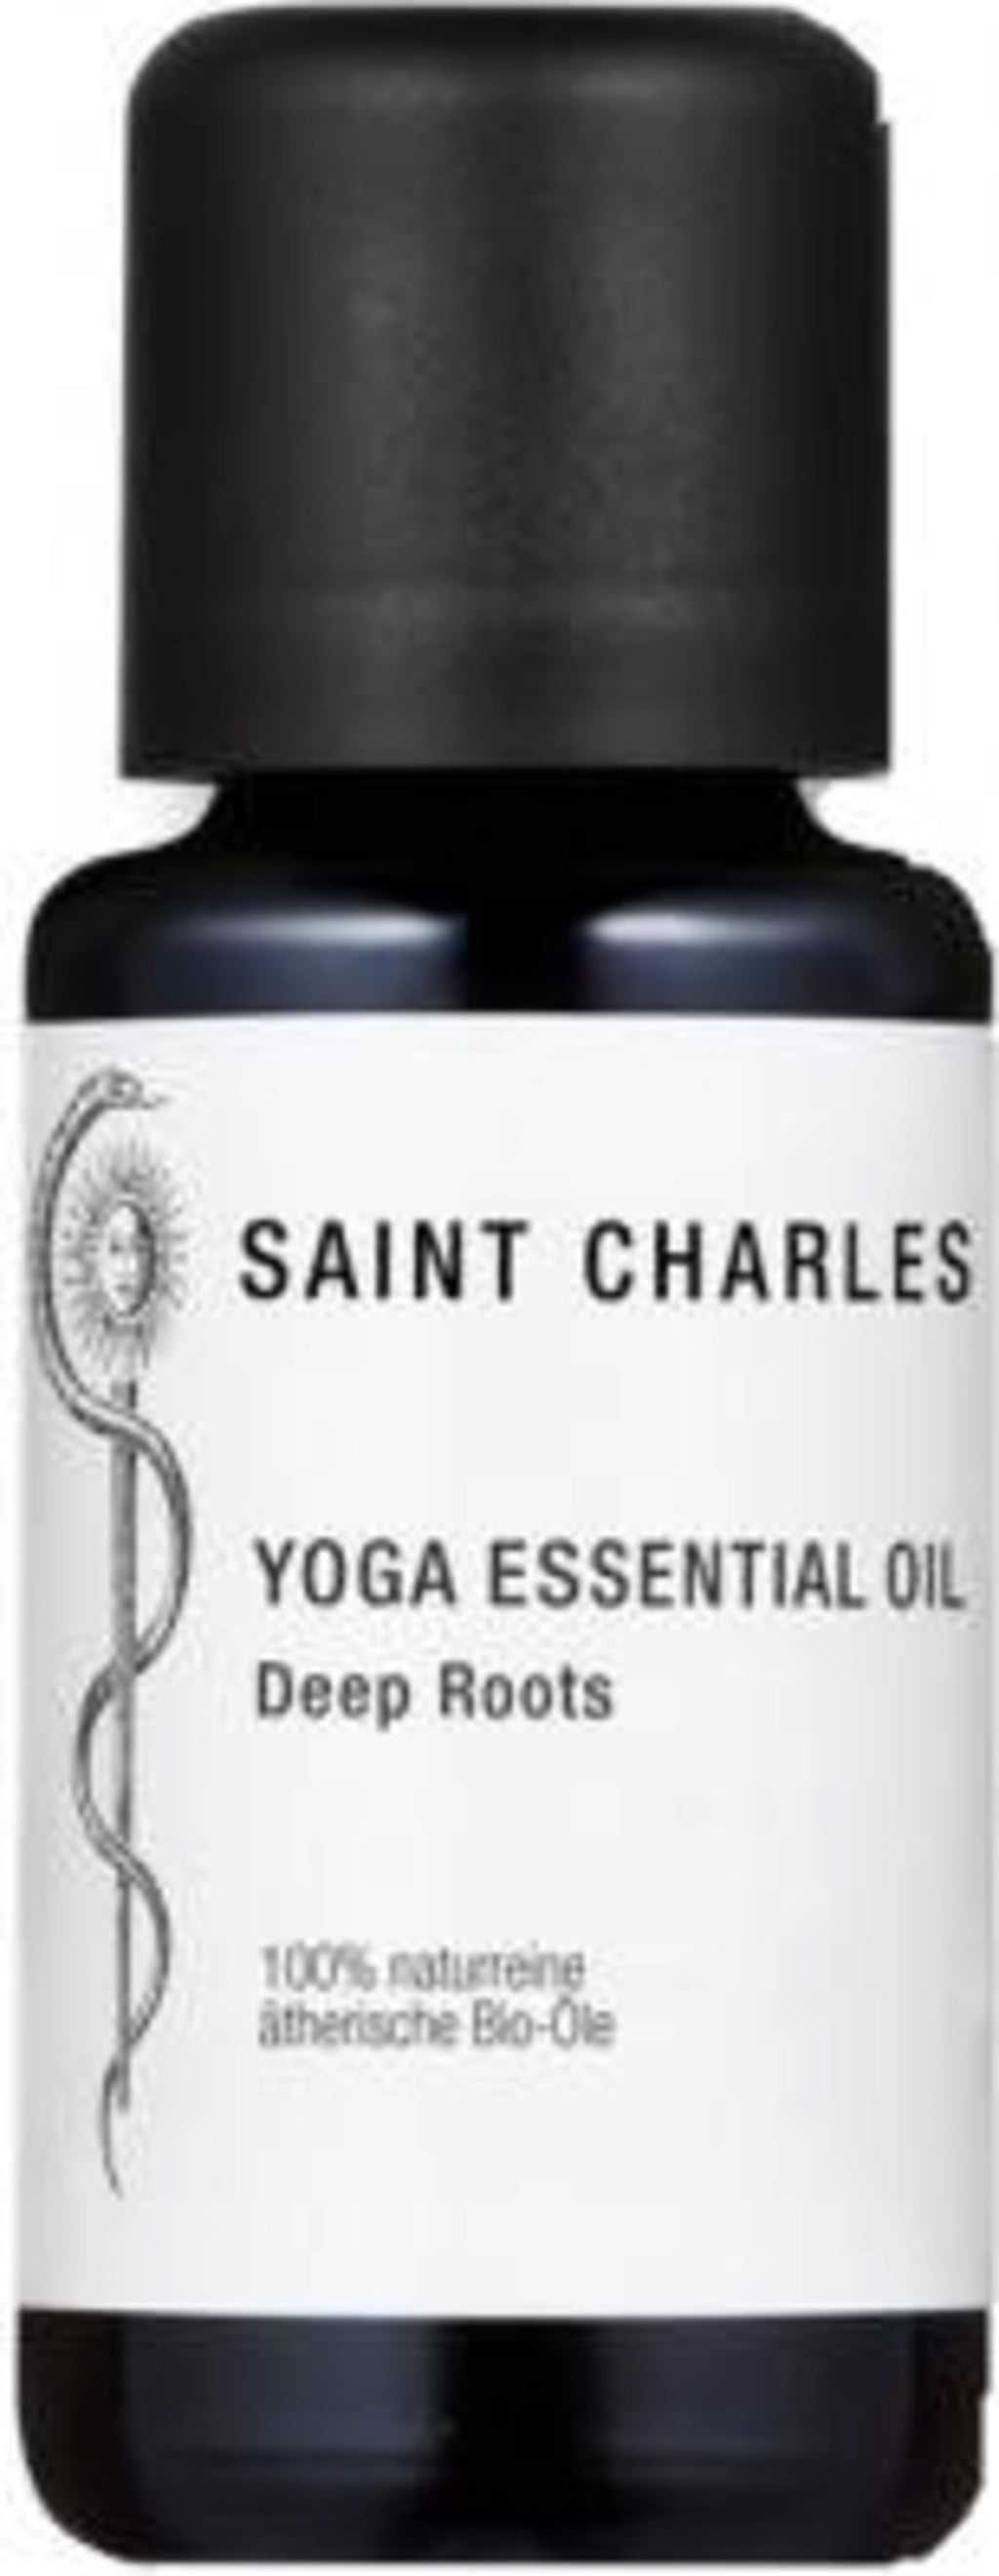 Yoga Body Spray Deep Roots by Saint Charles